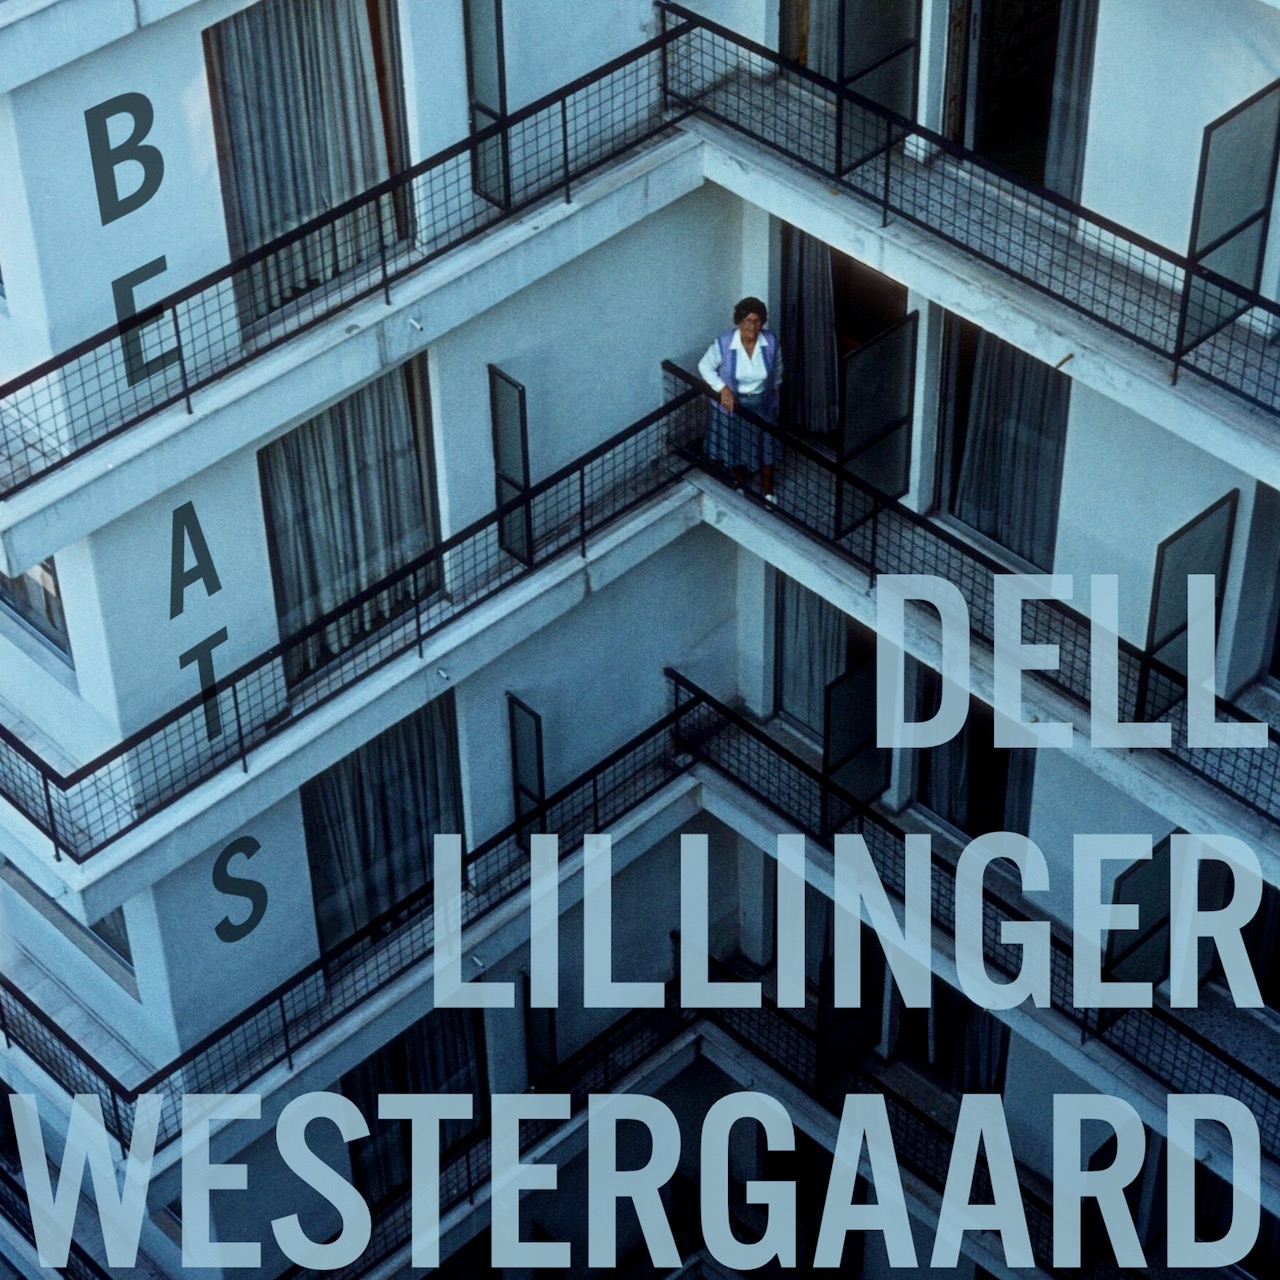 Christopher Dell Dell, Lillinger, Westergaard 2021 